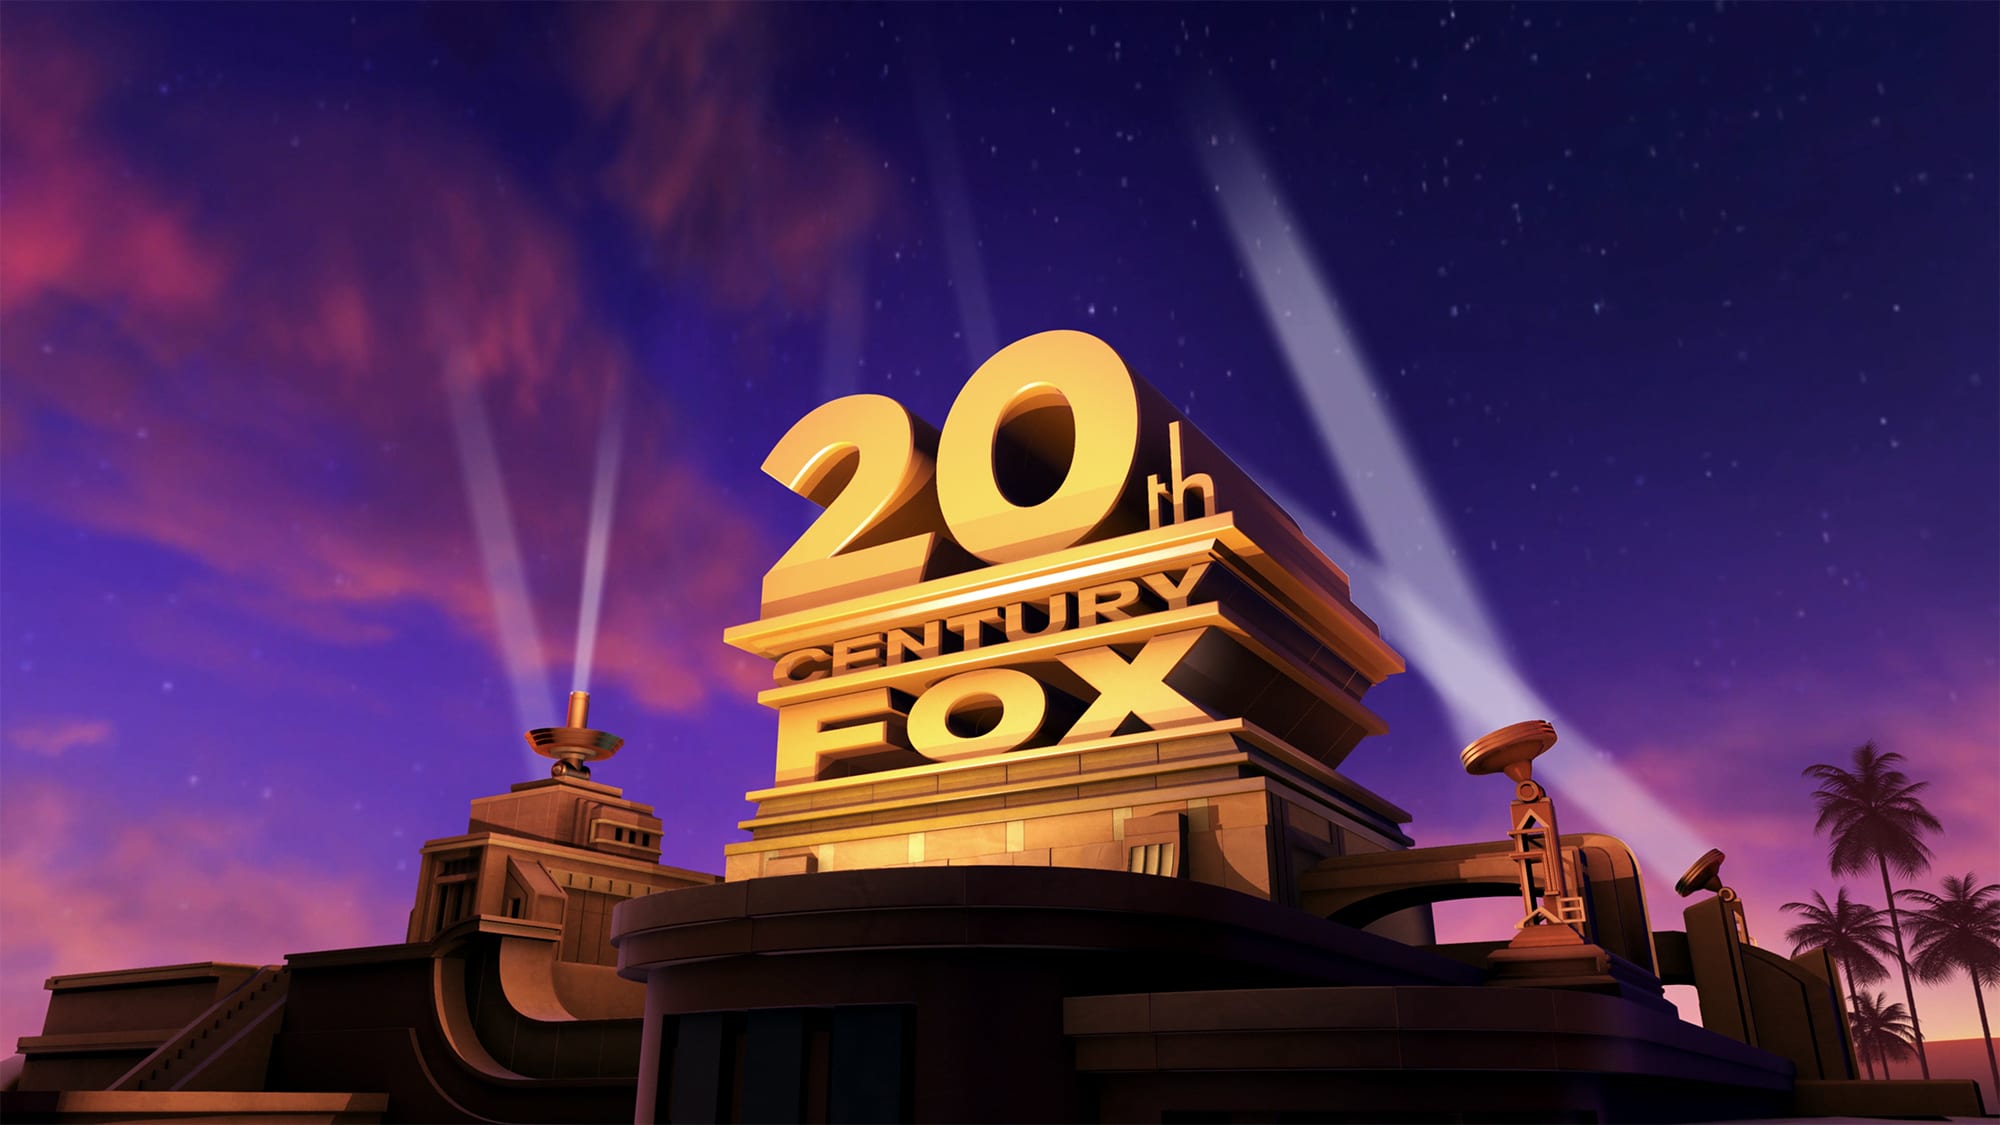 20 th fox. Студия 20 век Фокс в Лос Анджелесе. 20 Век Центури Фокс. 20th Century Fox 2013. 20th Century Fox игры.